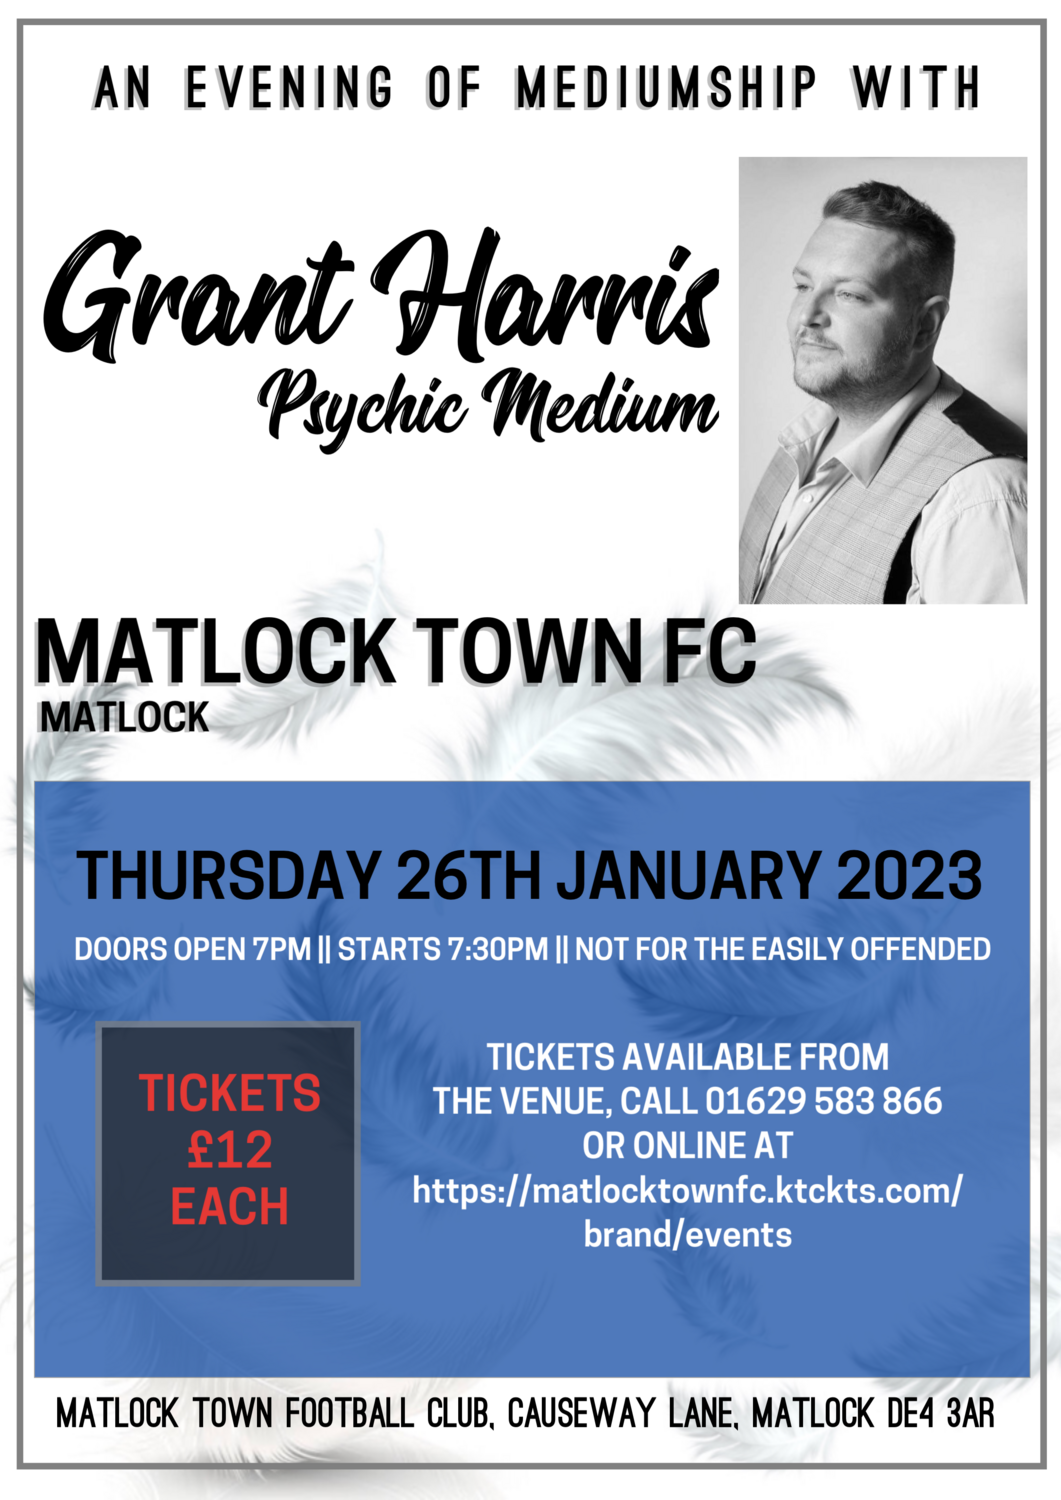 Matlock Town Football Club, Thursday 26th January 2023